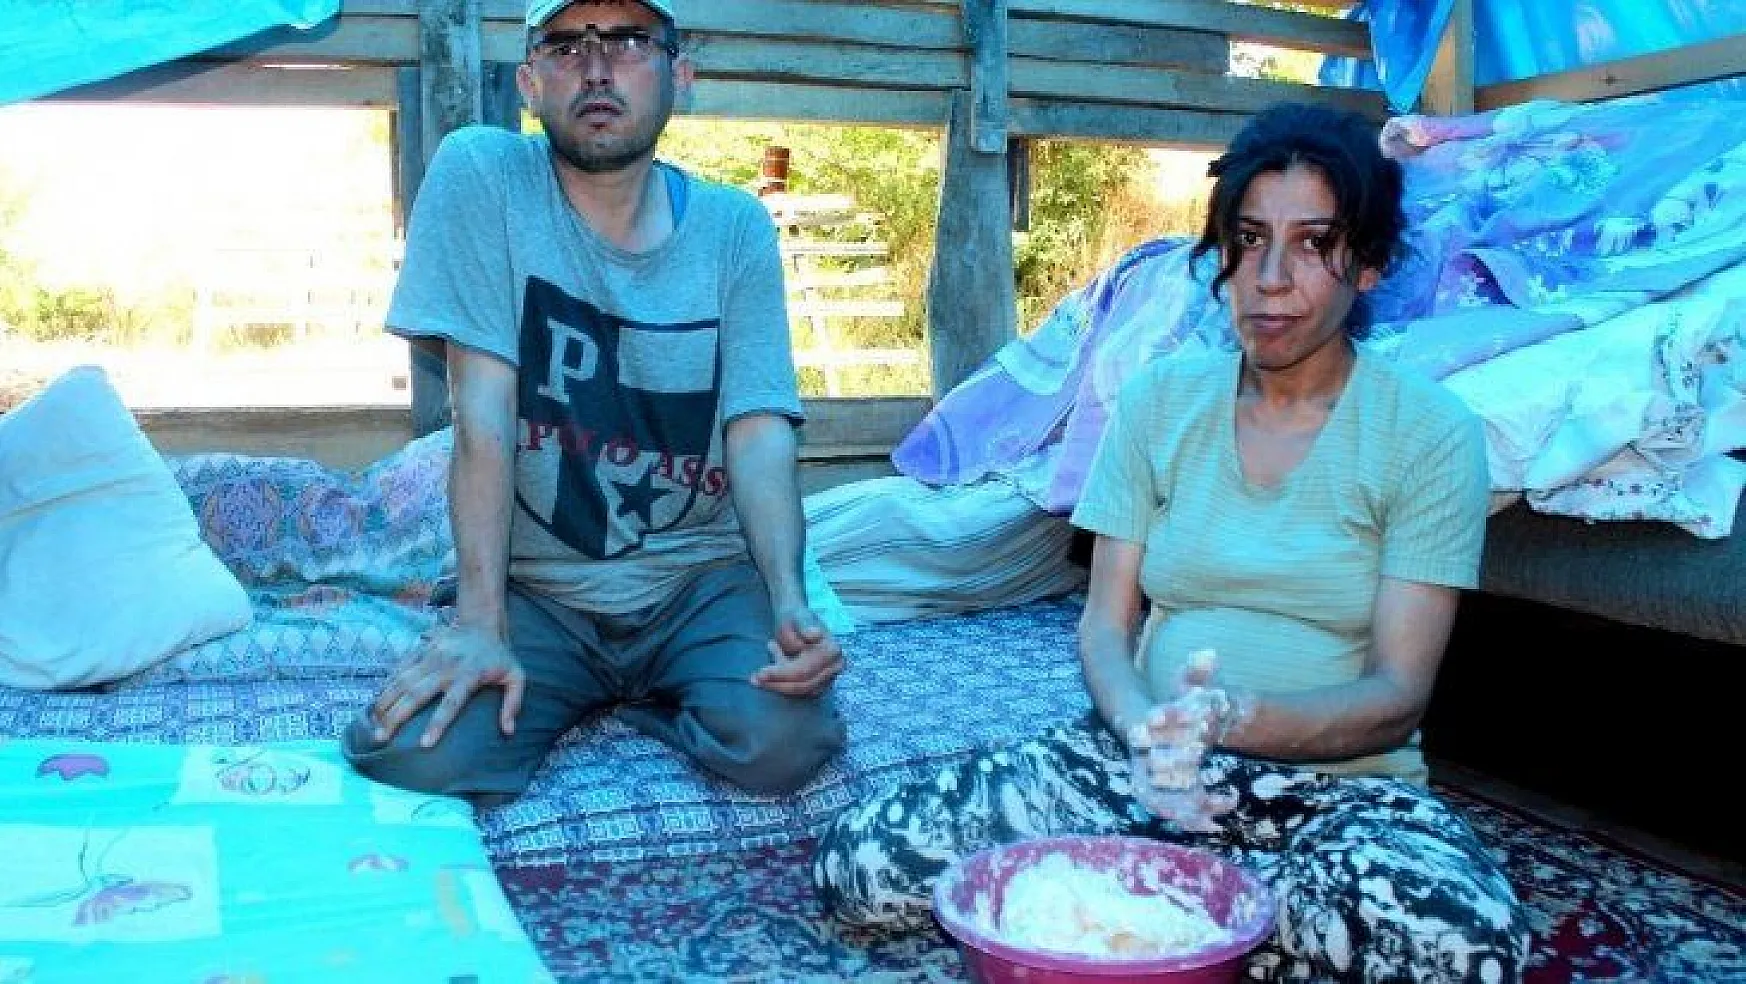 Çadırda yaşayan engelli çiftin yaşam mücadelesi